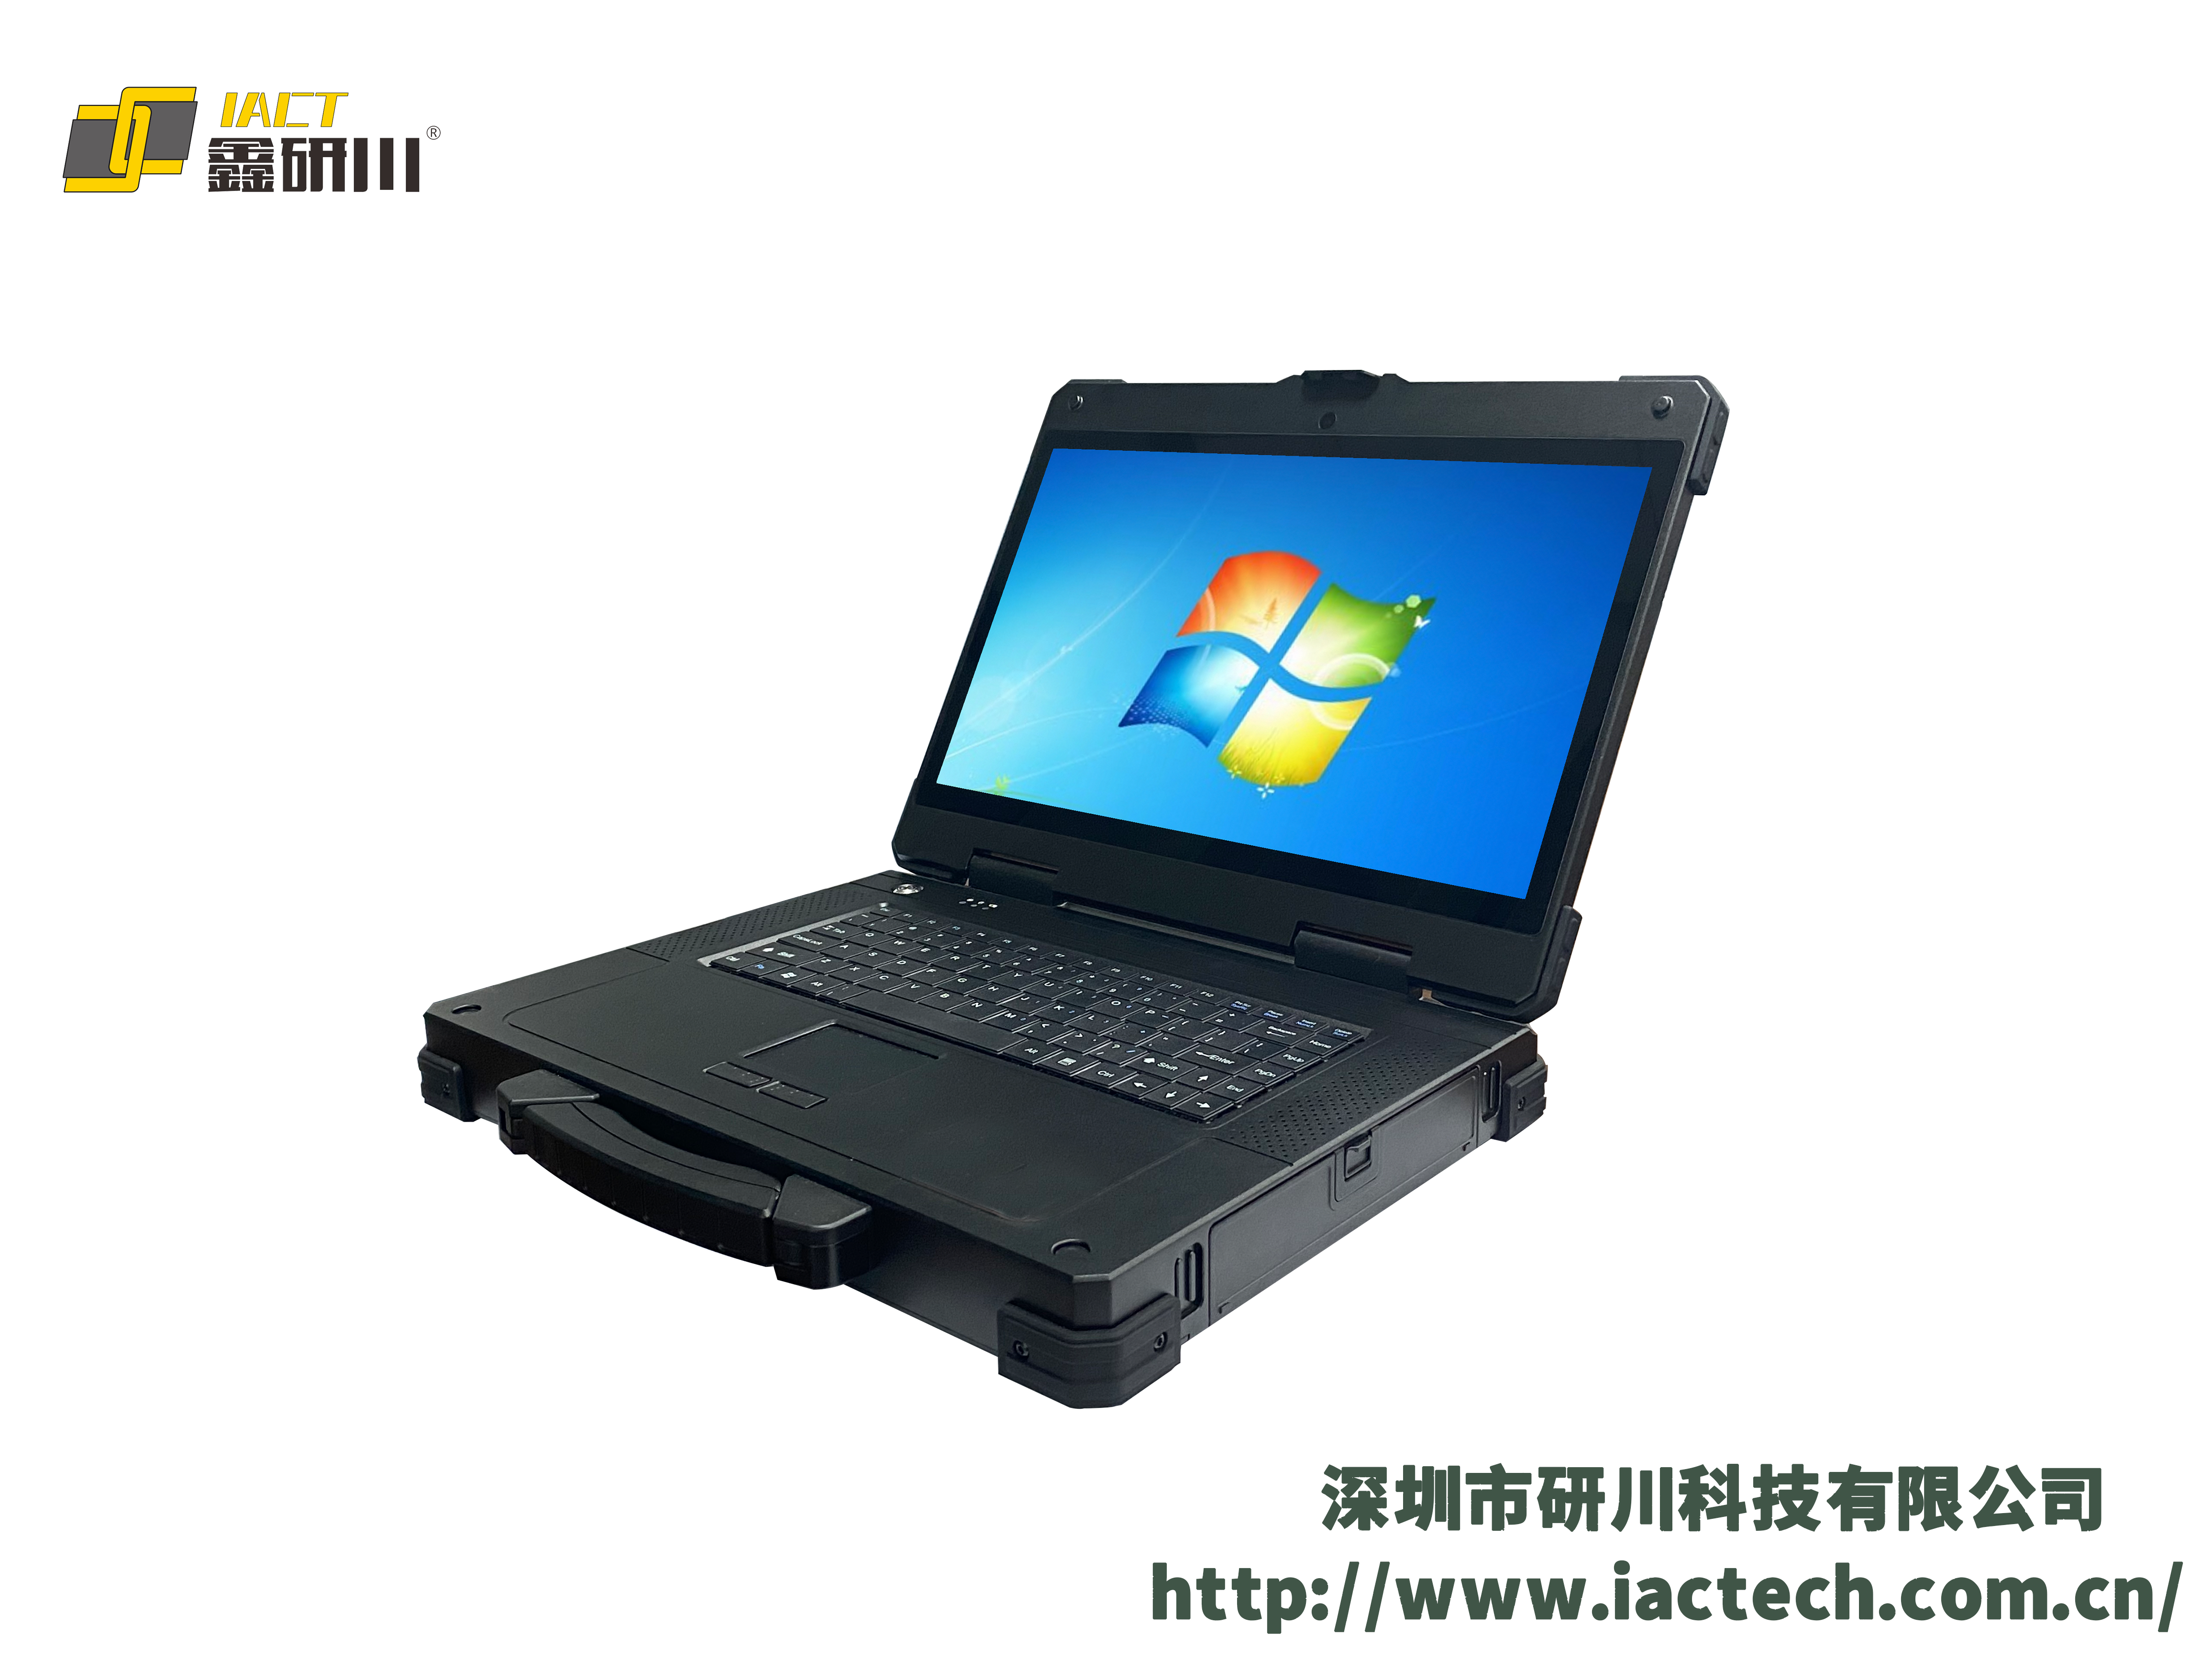 RTC-AX1506U-0019D 加固笔记本-研川科技产品